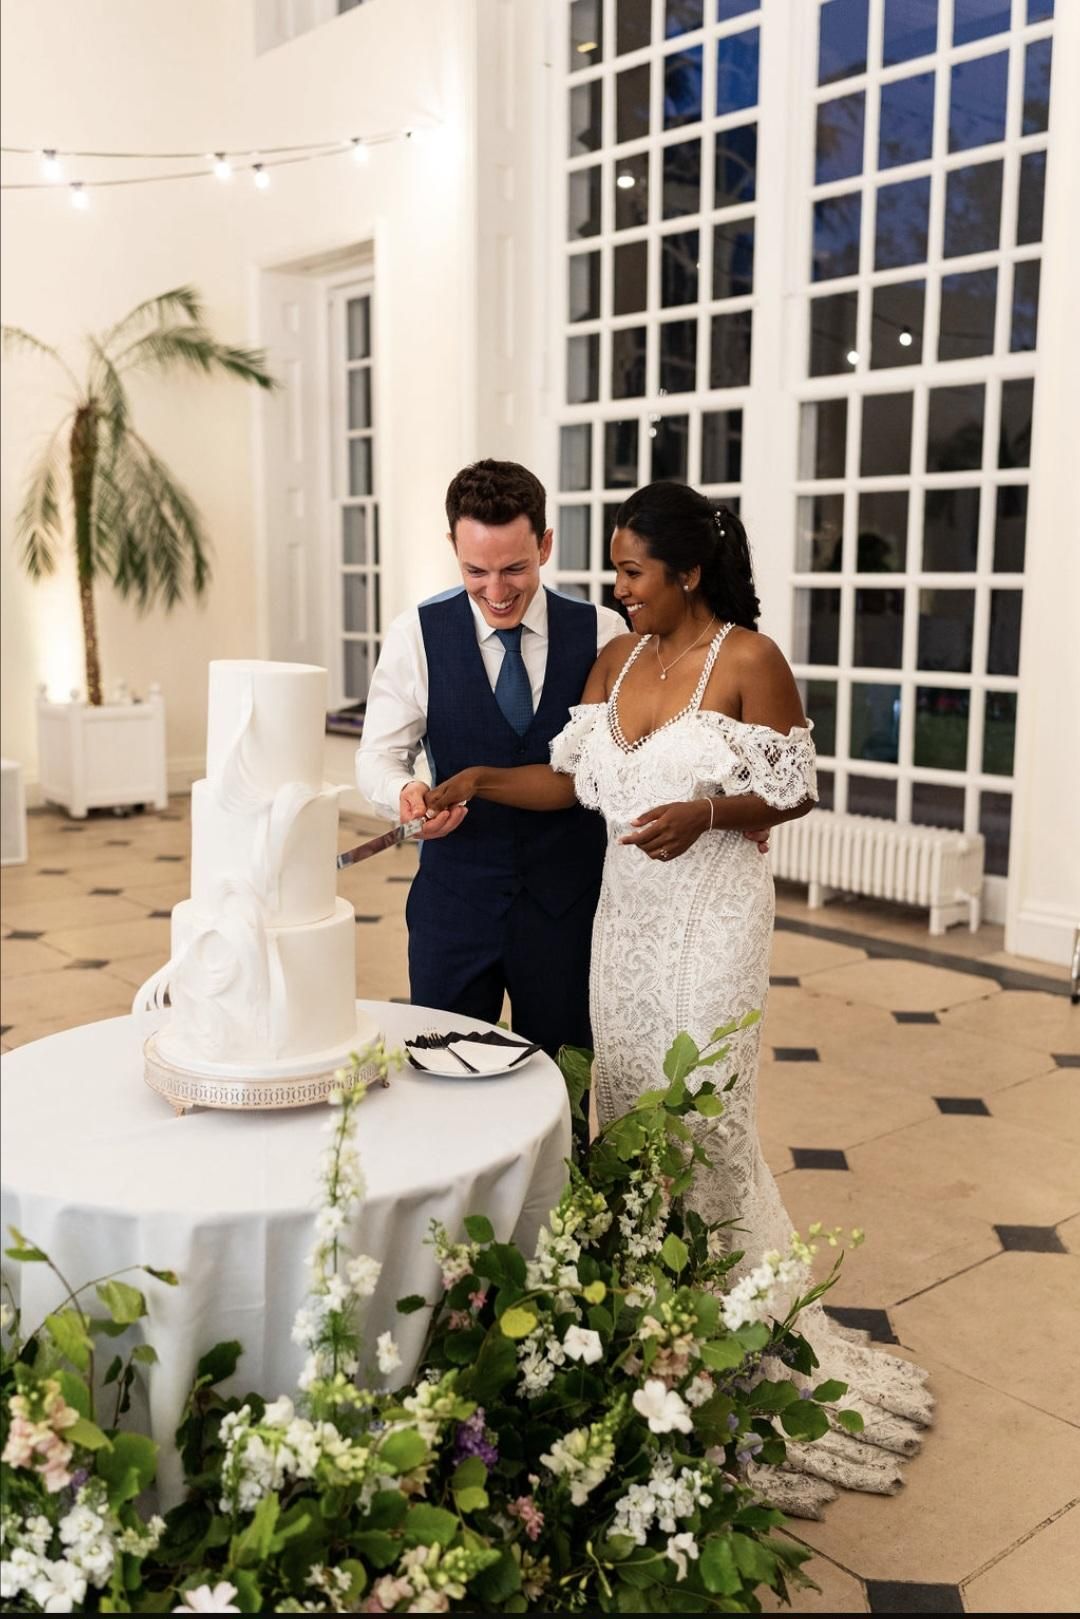 The couple cutting their wedding cake